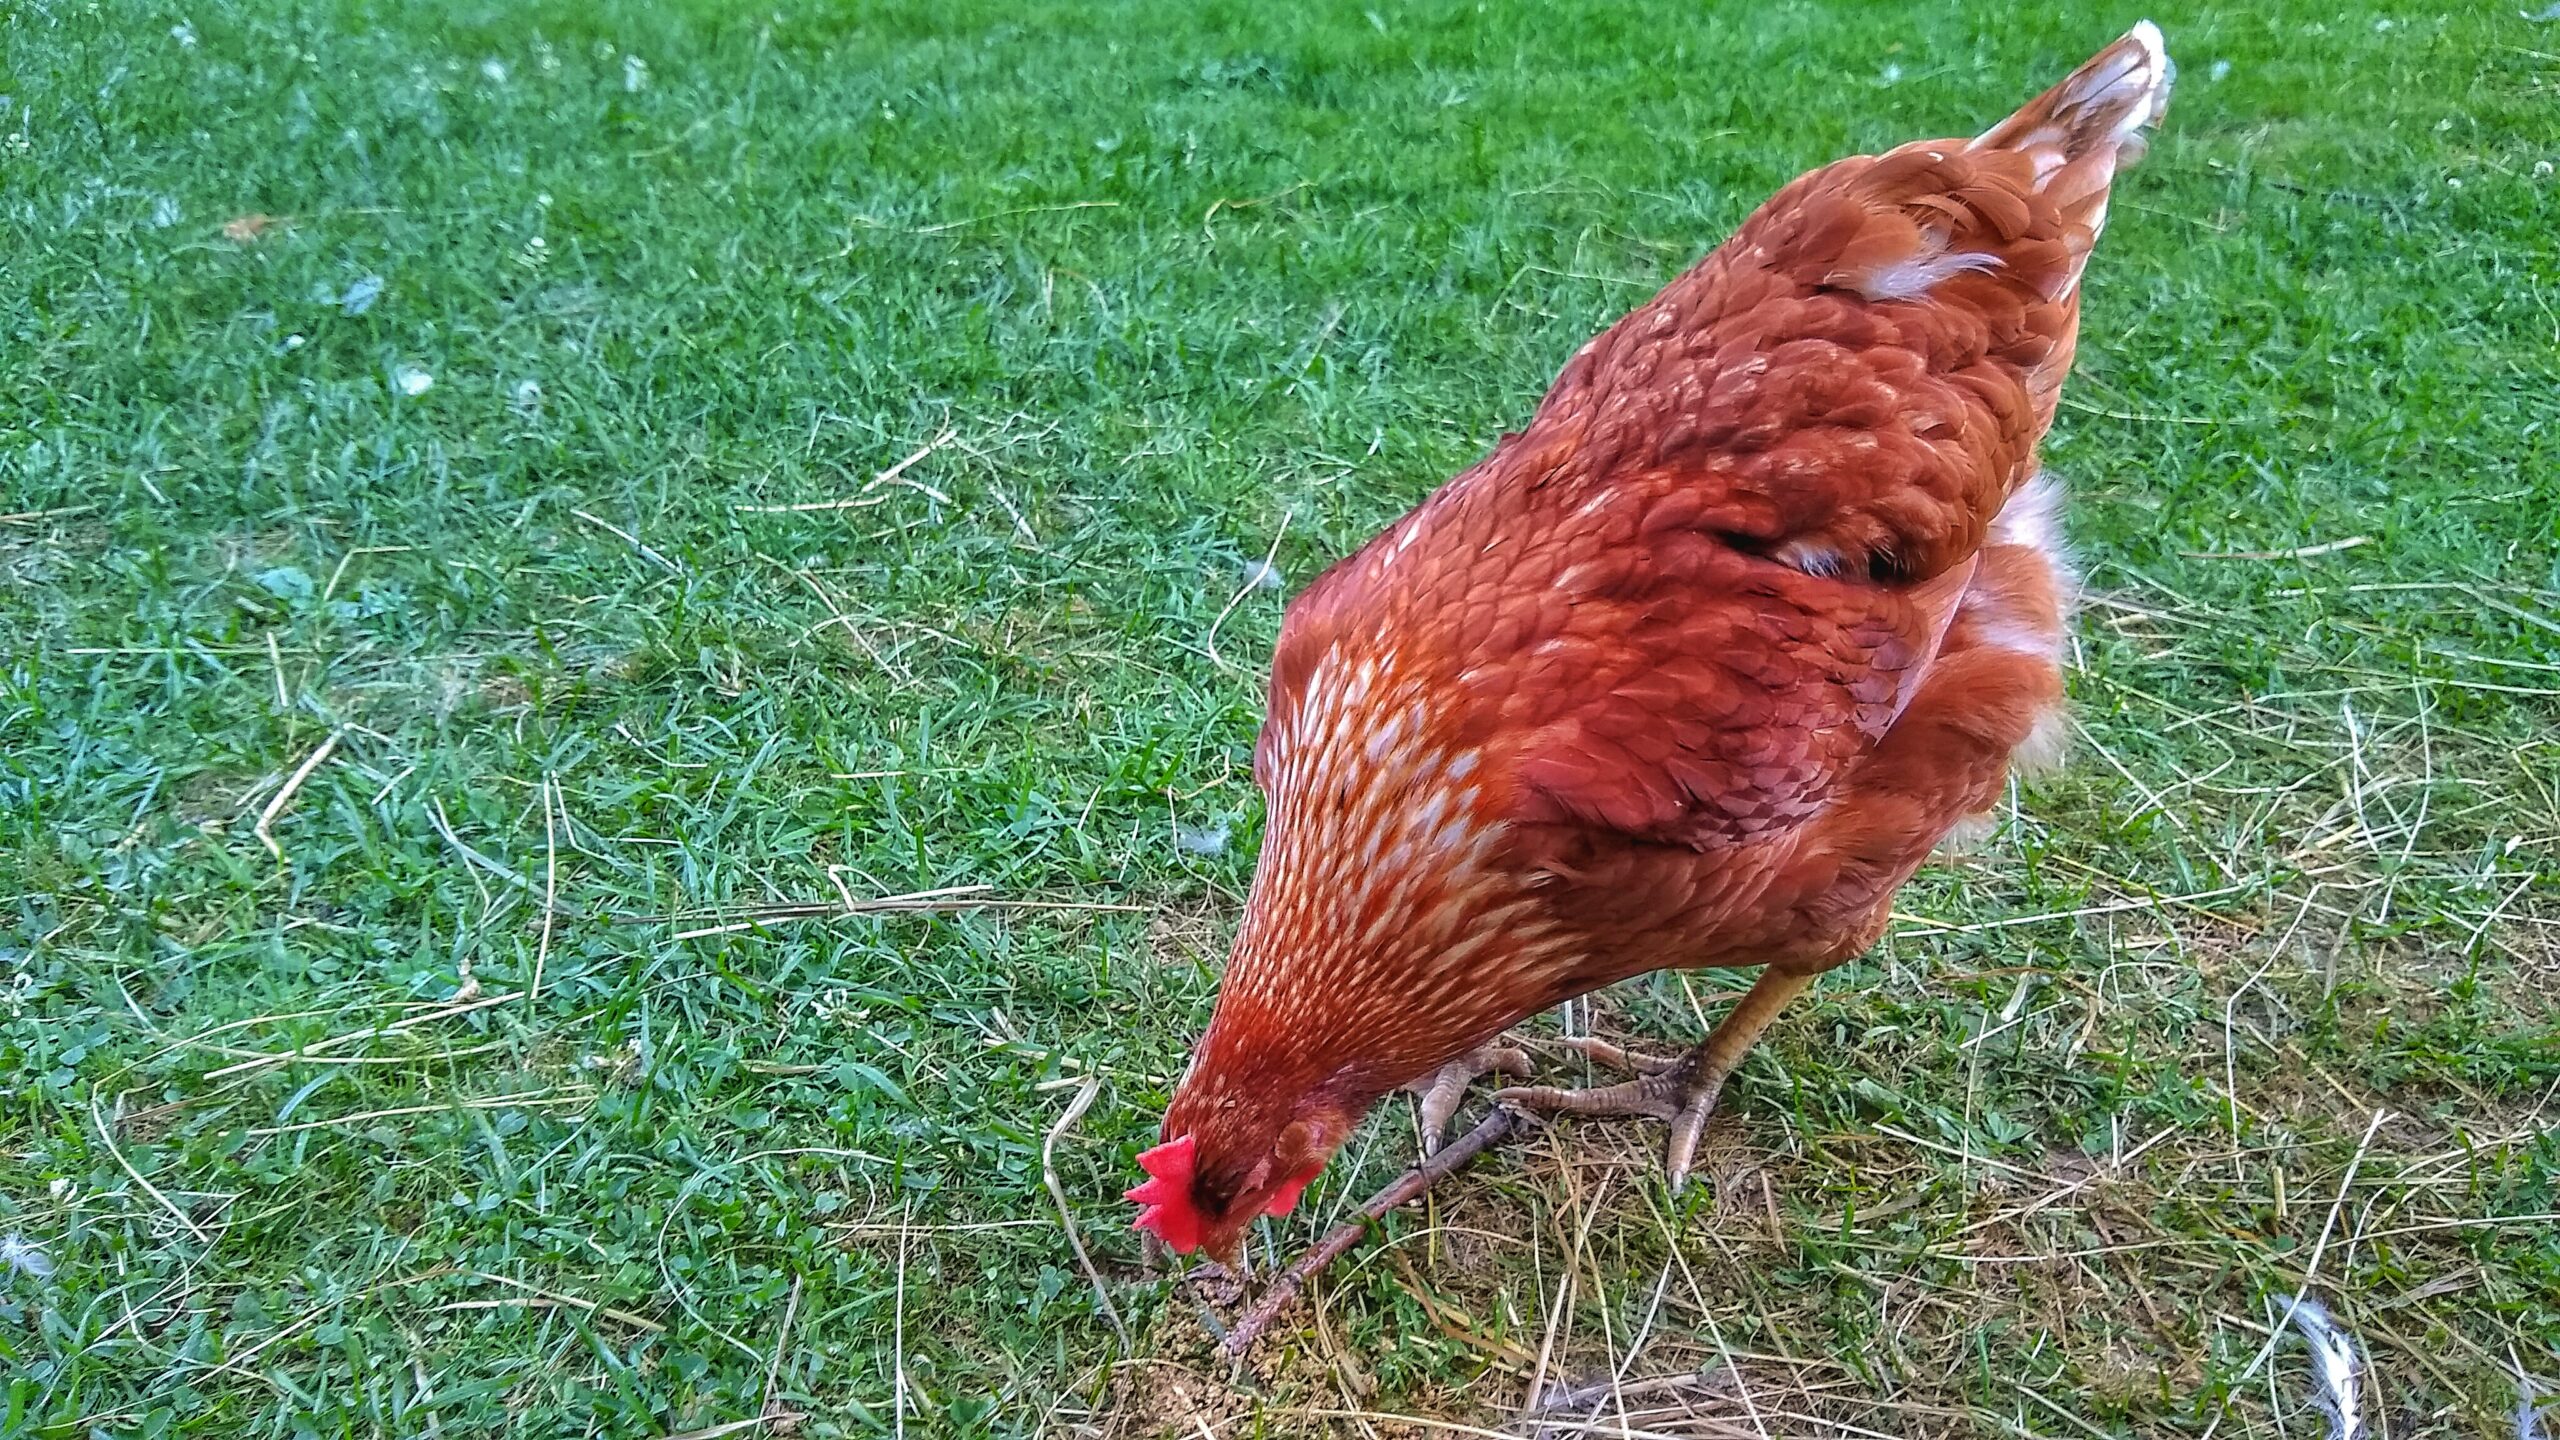 Cinnamon queen chicken pecking at the ground